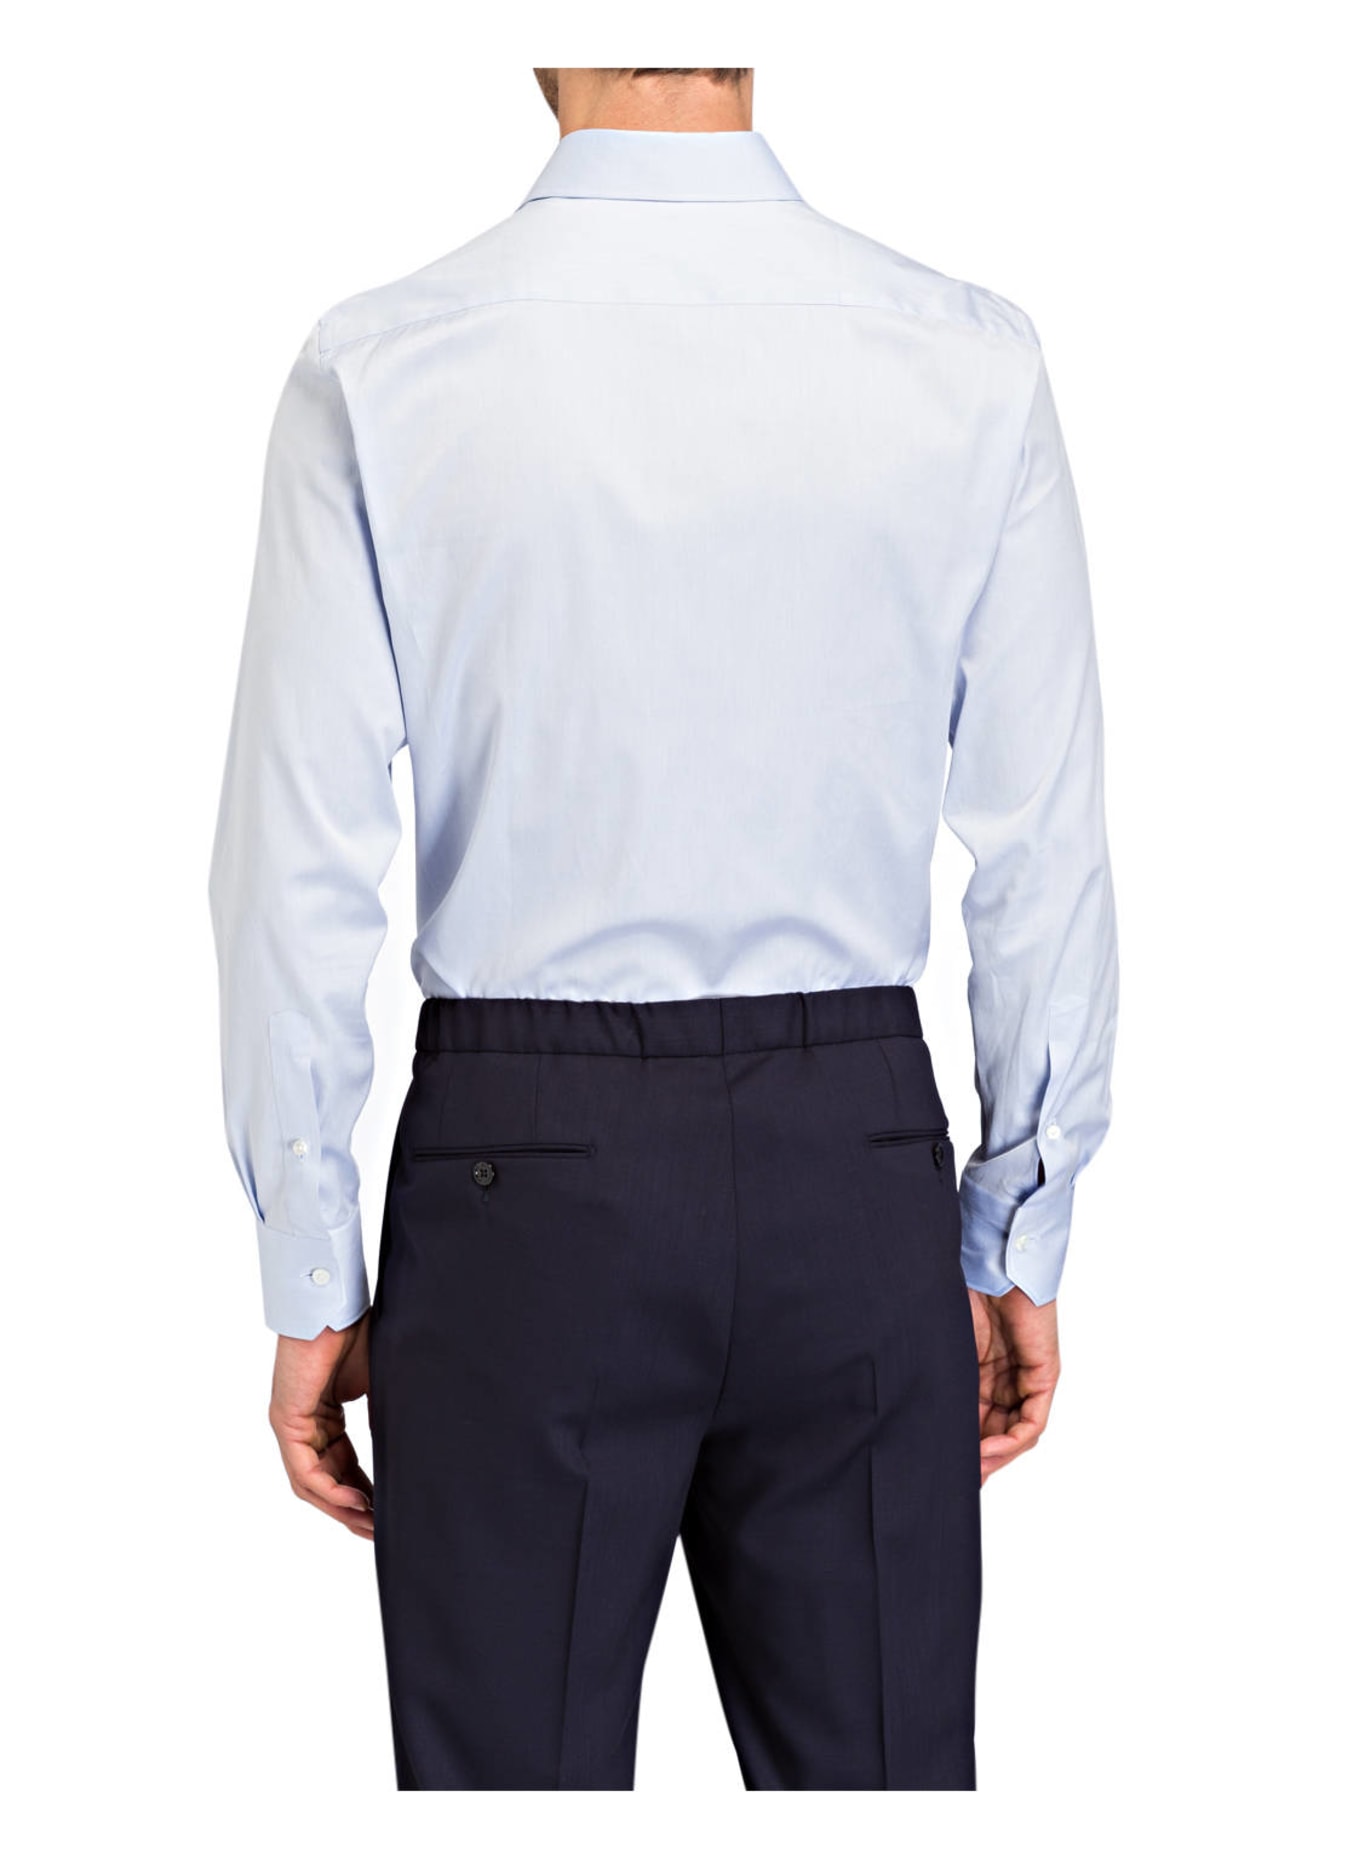 ZEGNA Shirt tailored fit, Color: LIGHT BLUE (Image 3)